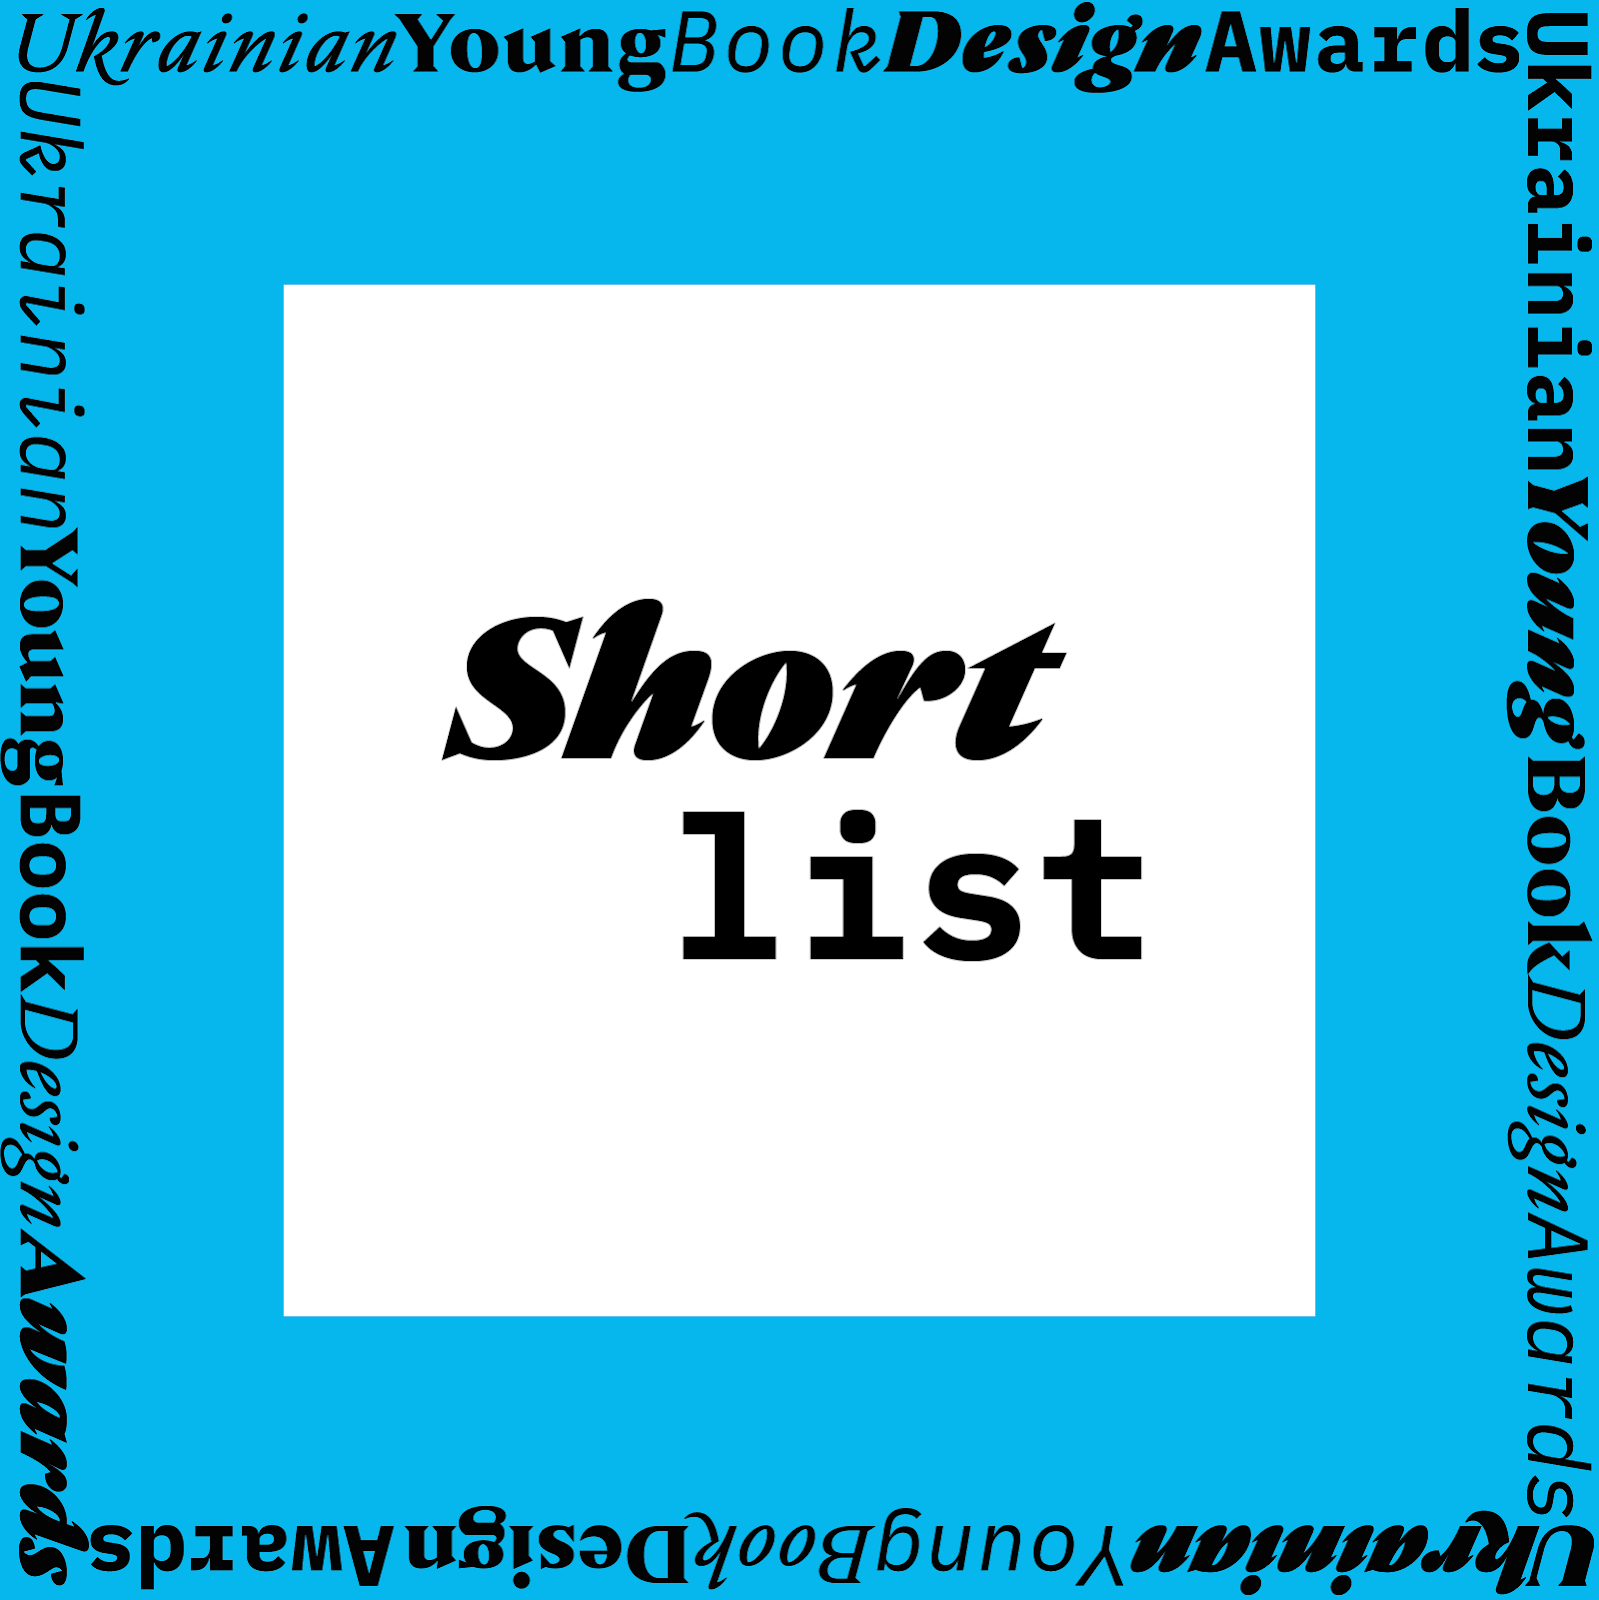 Оголошено шортлист конкурсу Ukrainian Young Book Design Awards 2020